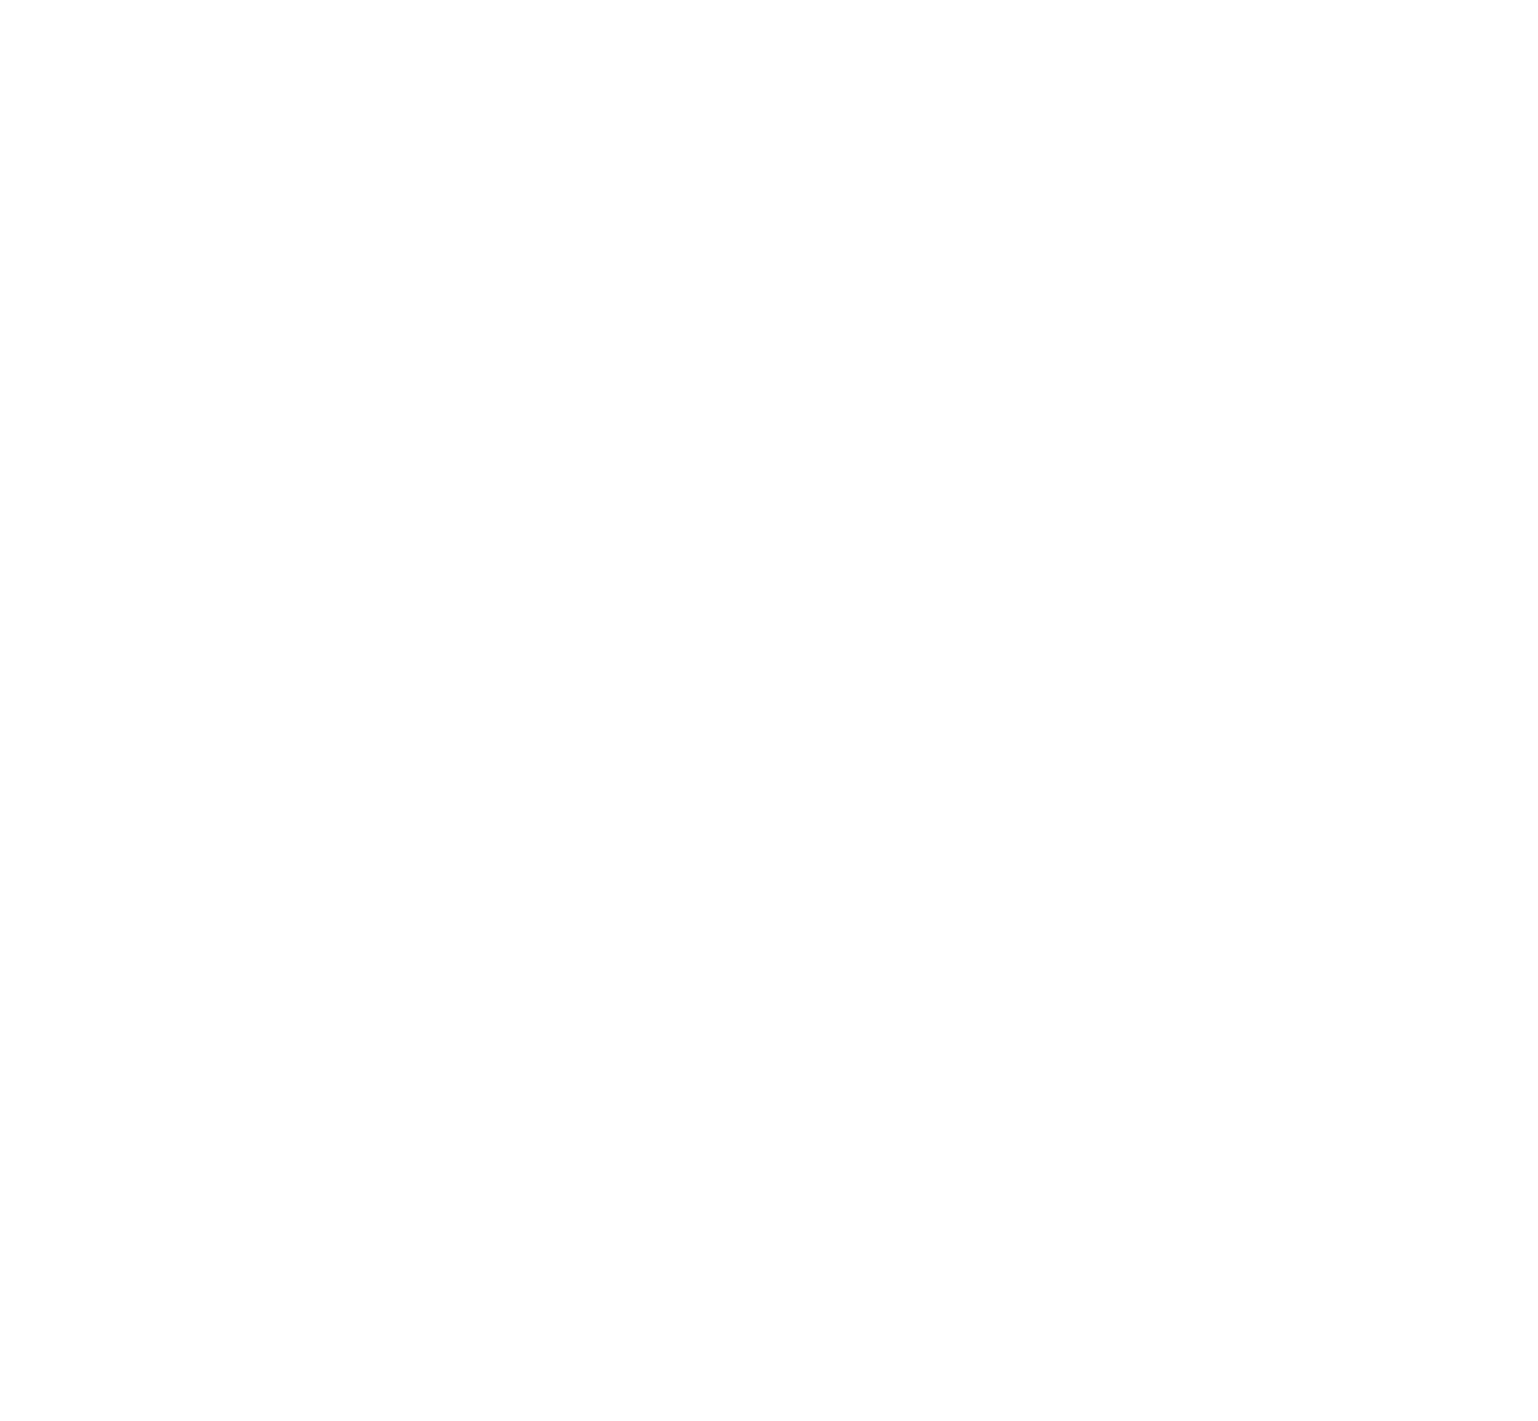 CDW Corporation logo large for dark backgrounds (transparent PNG)